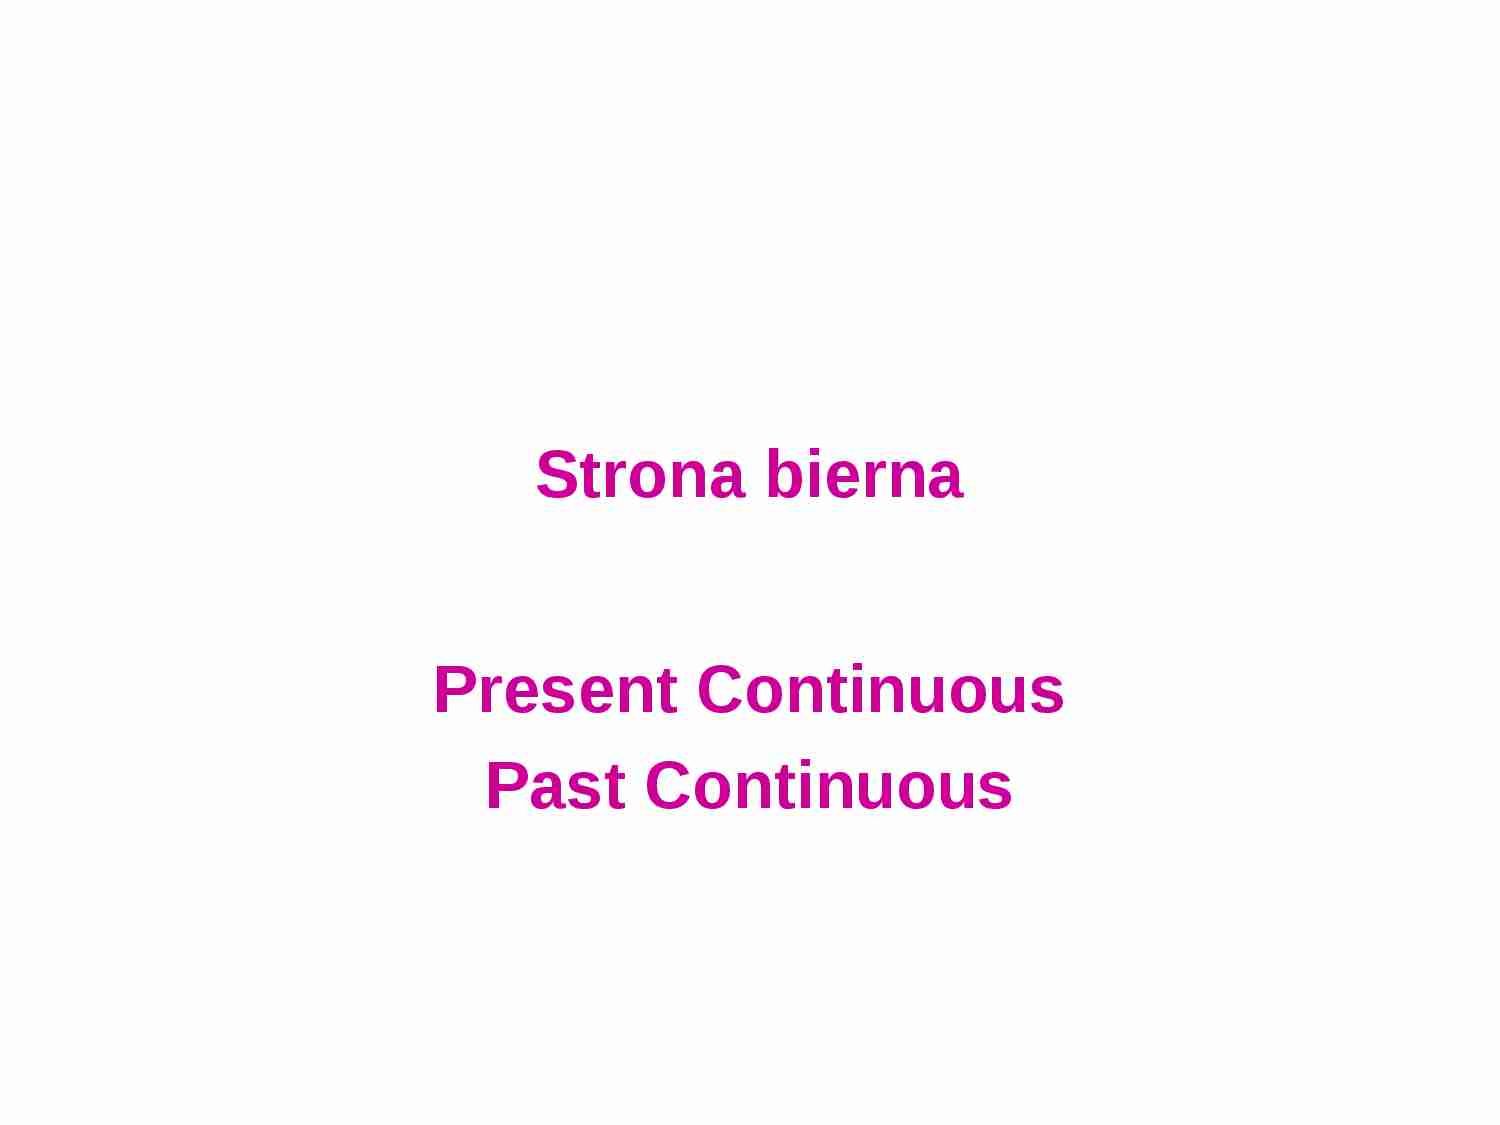 Present Continuous, Past Continuous - strona bierna - strona 1